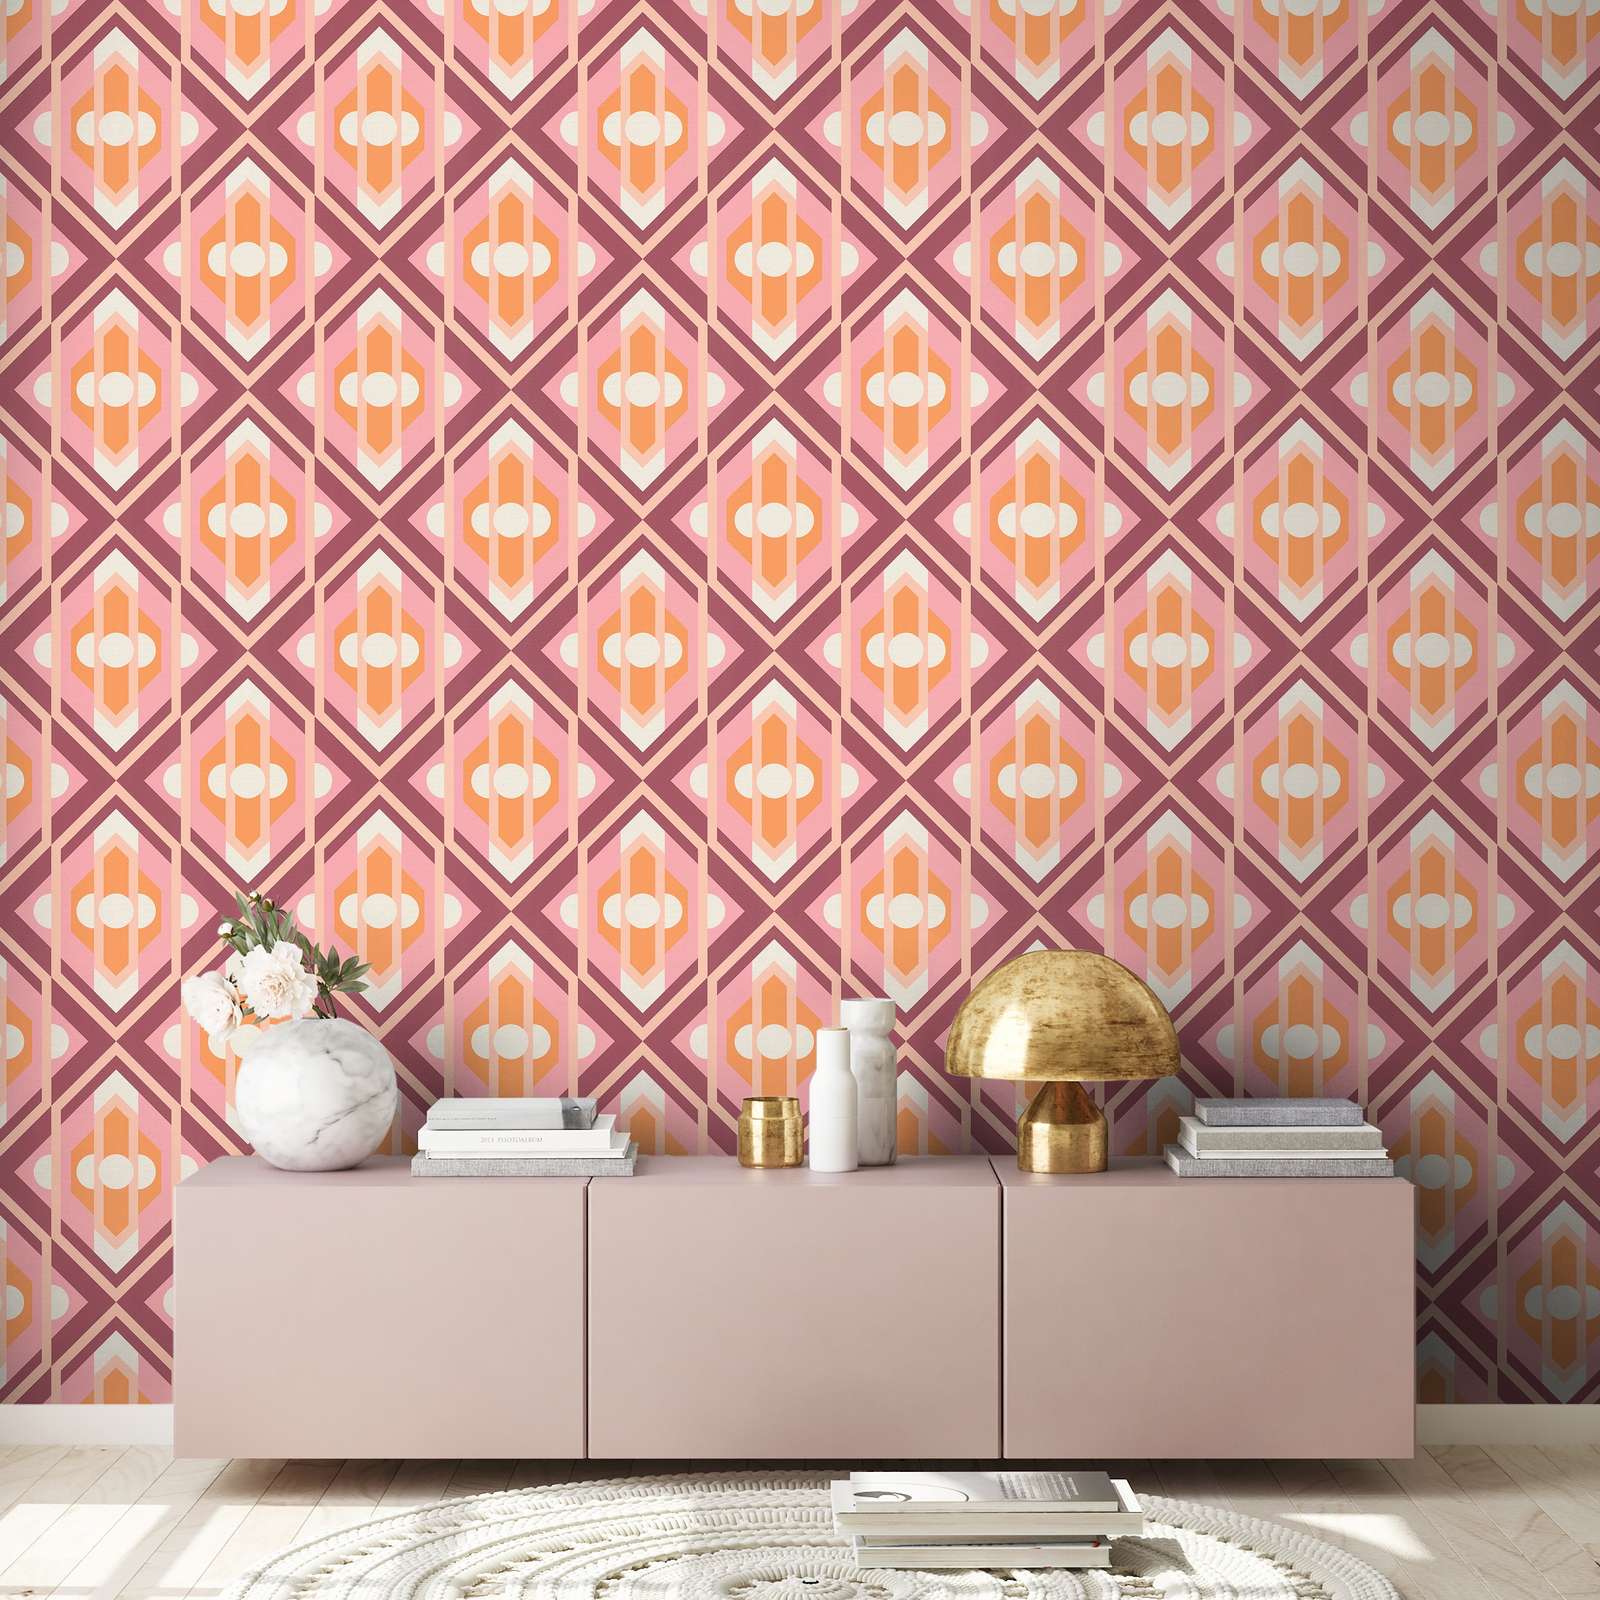             Non-woven wallpaper with geometric ornaments in retro style - orange, pink, white
        